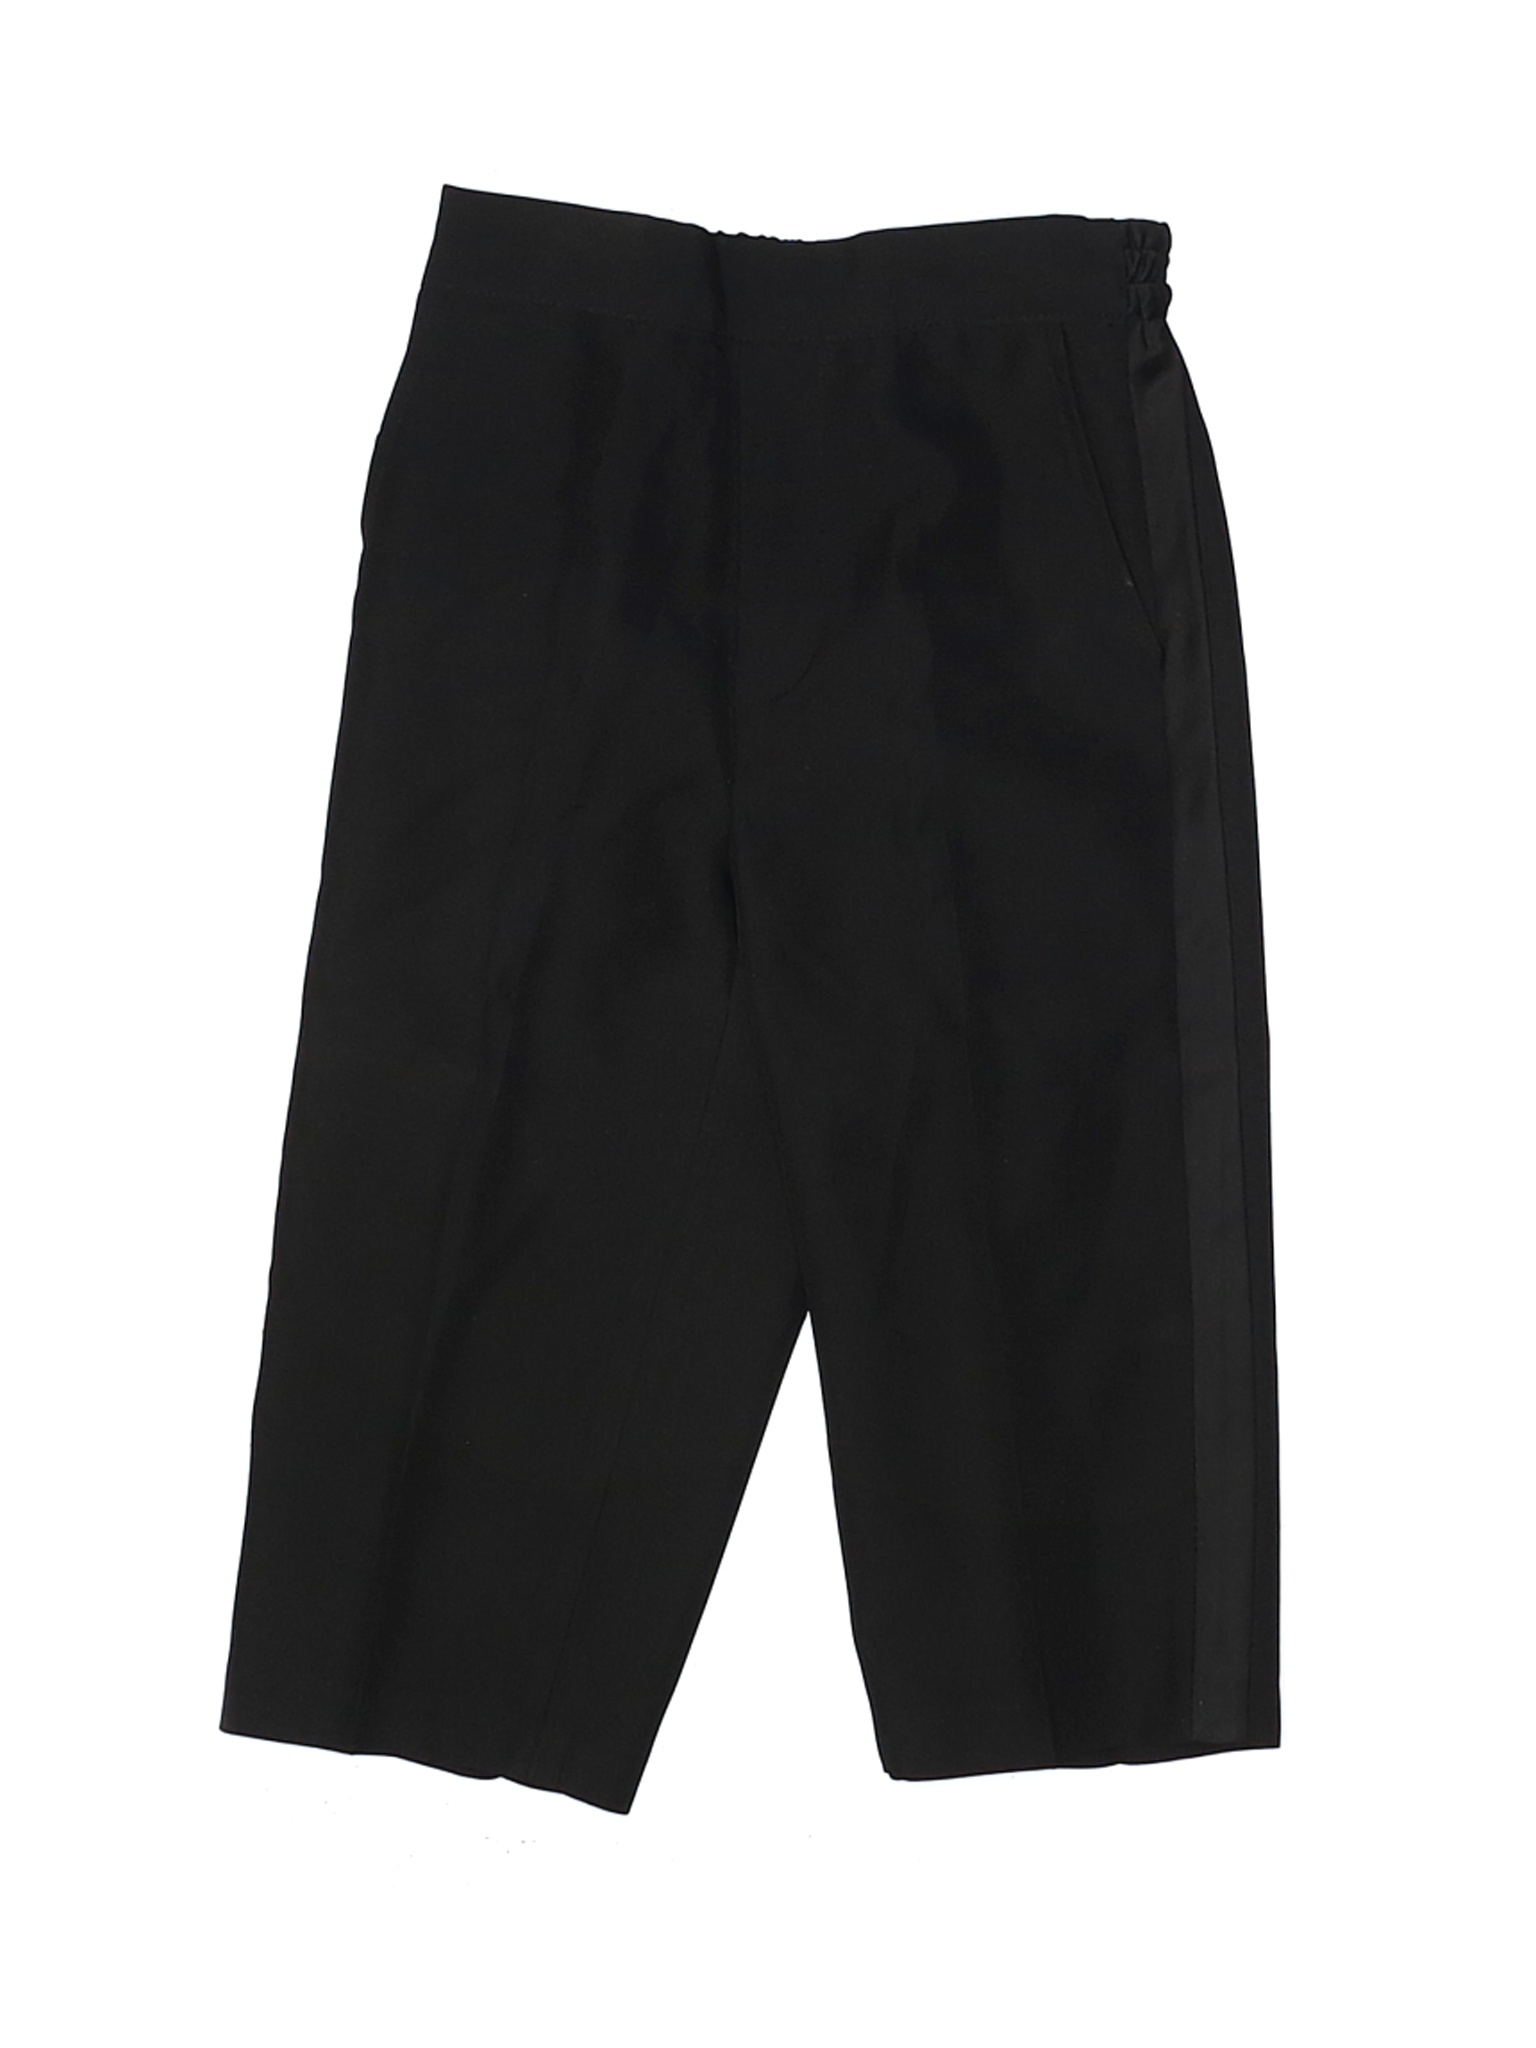 Unbranded Boys Black Dress Pants 2T | eBay